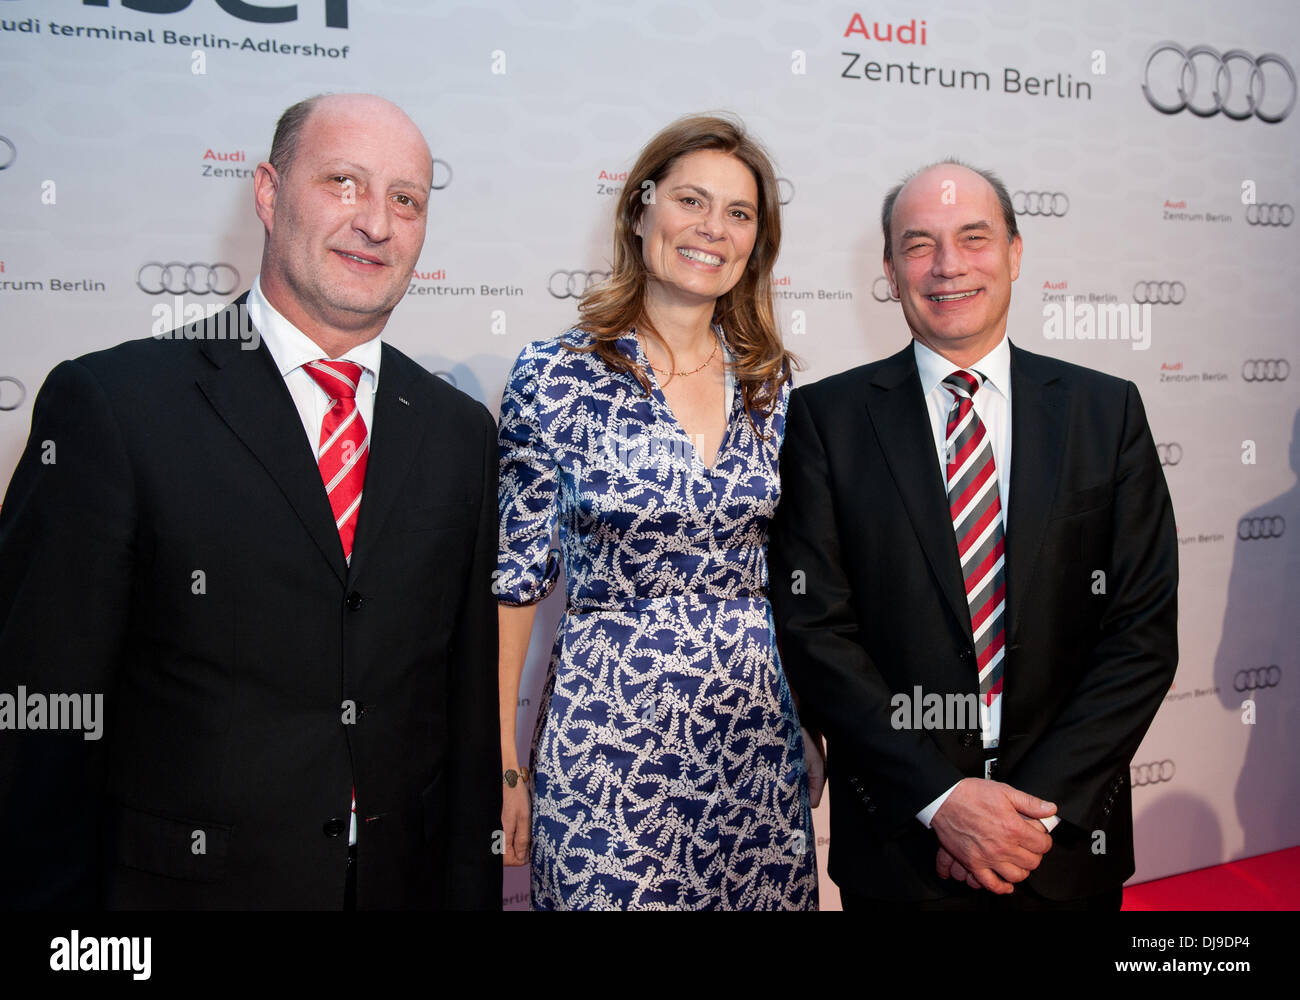 Andre Reiser, Sarah Wiener and Ferdinand Schneider at Grand Opening of the Audi Zentrum Berlin-Adlershof. Berlin, Germany - 18.04.2012 Stock Photo